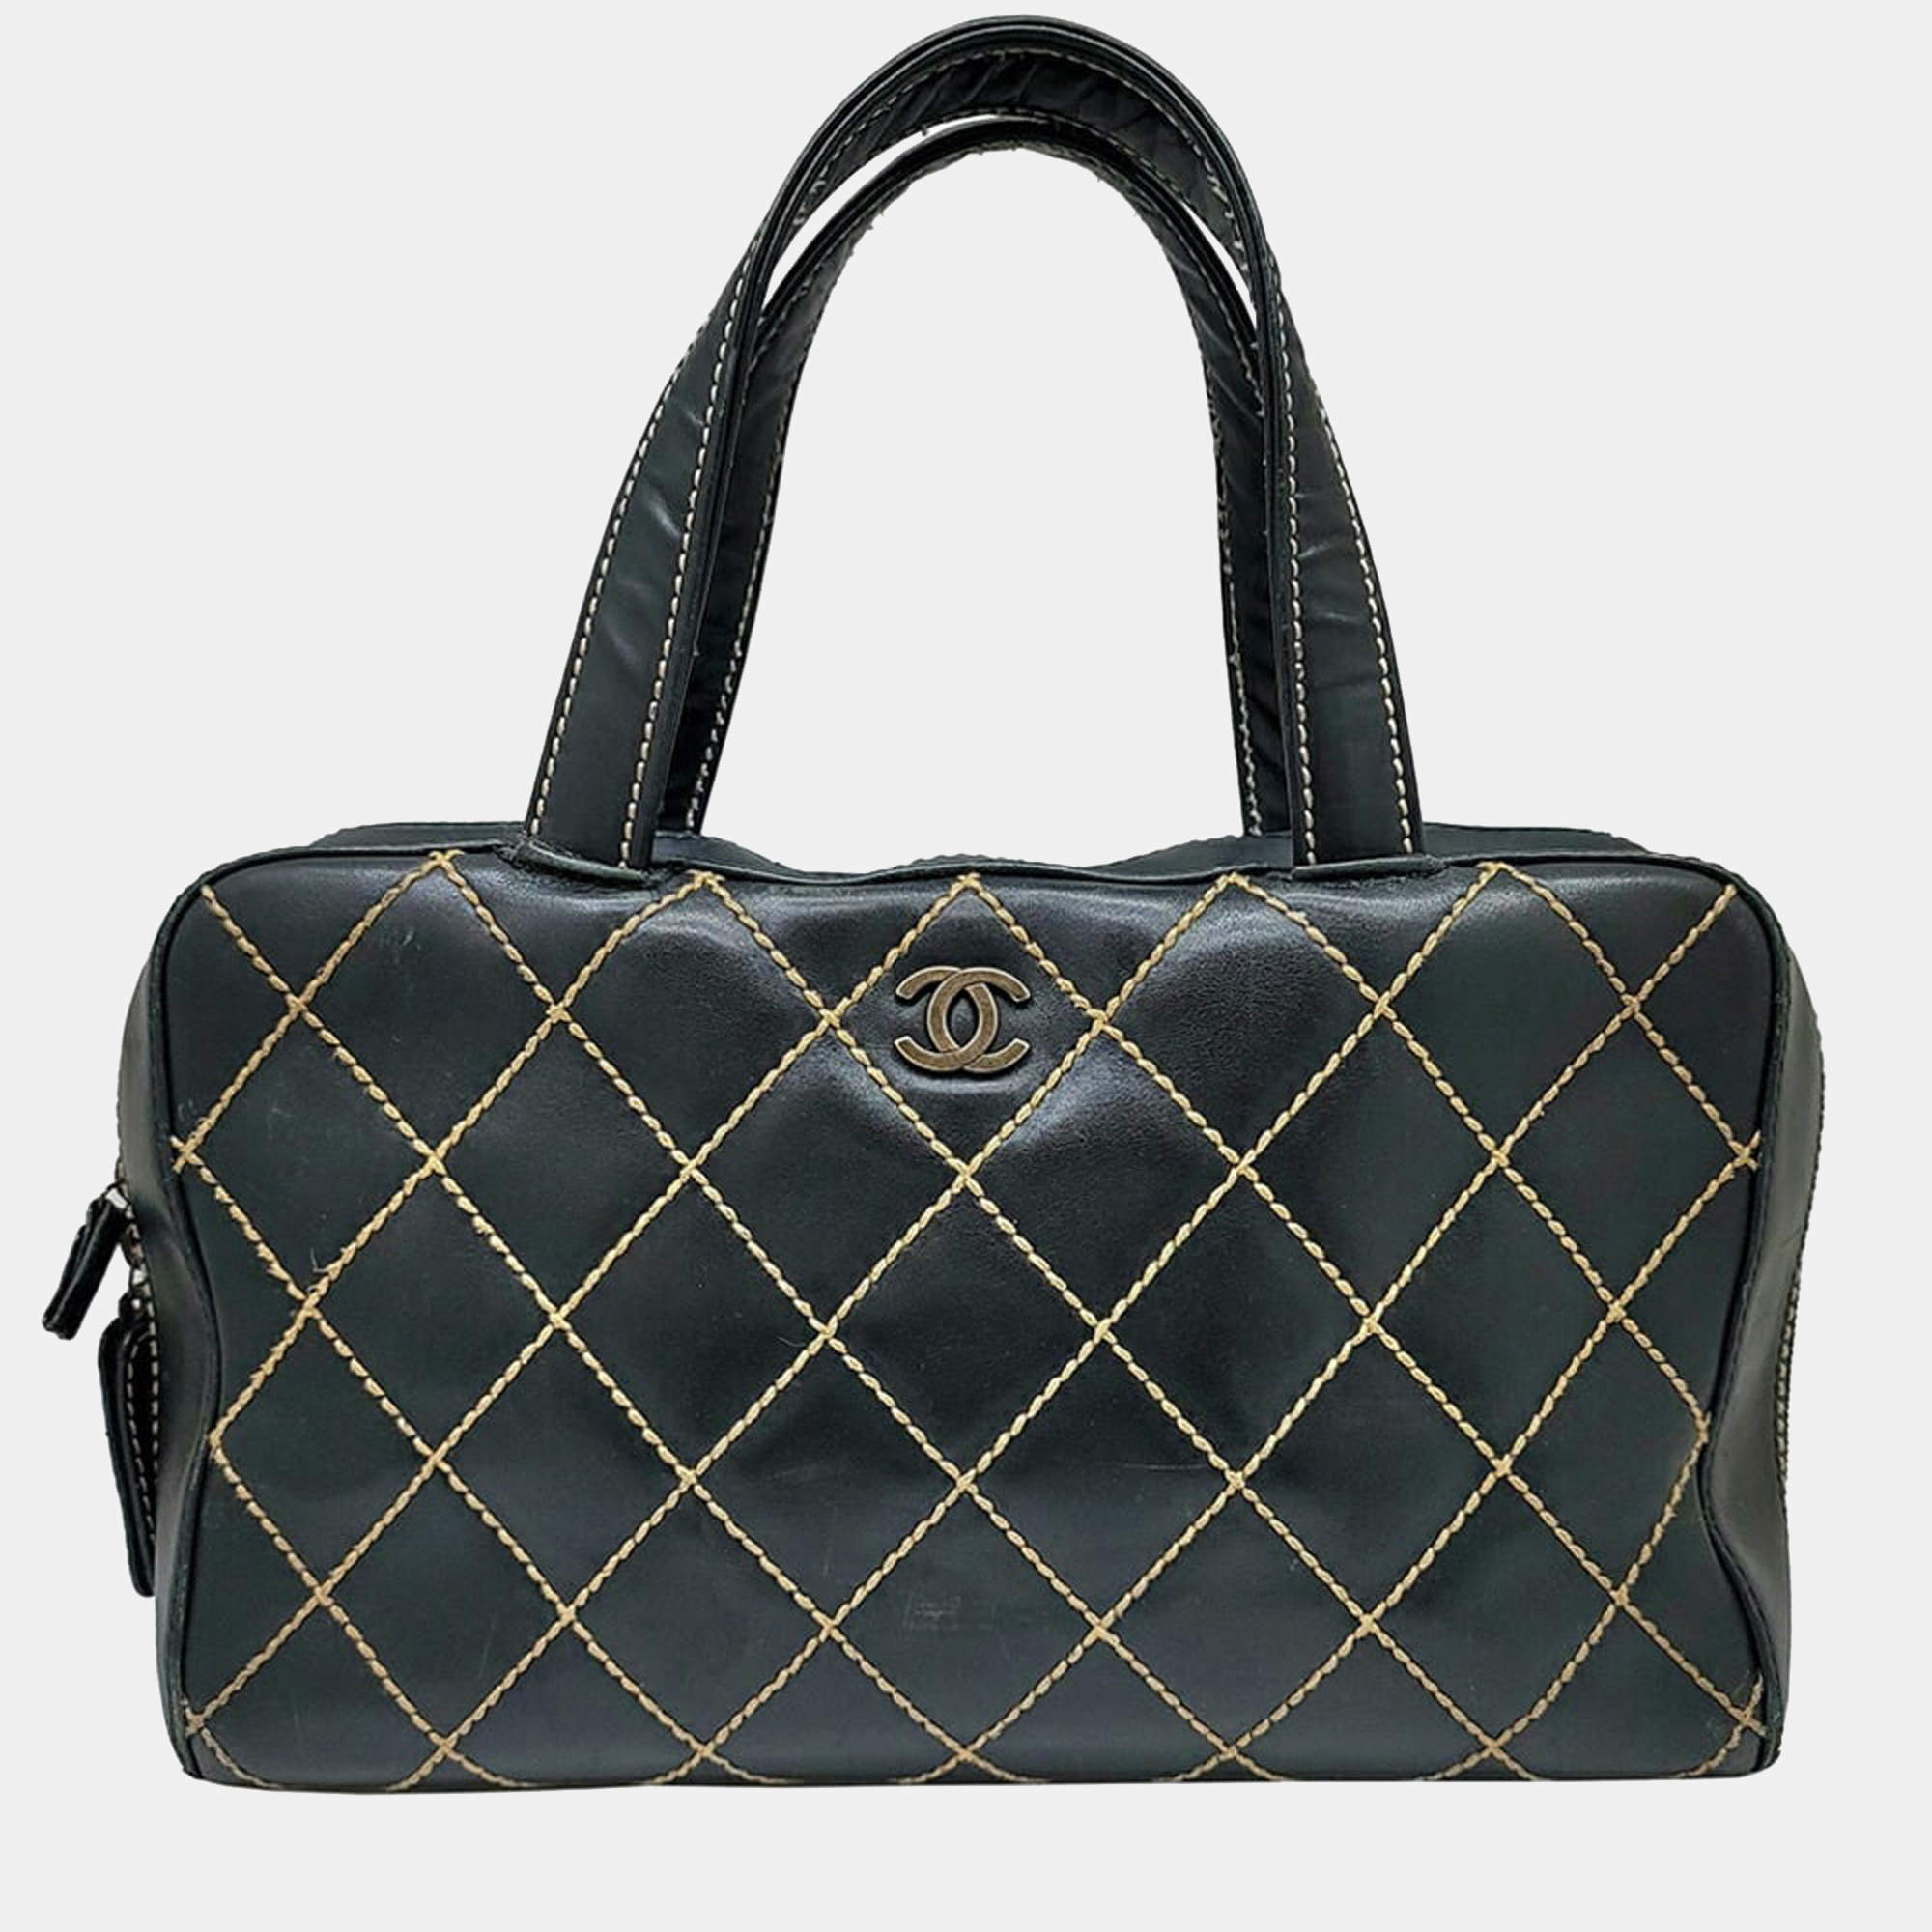 Chanel Black Leather Wild Stitch Shoulder Bag Chanel